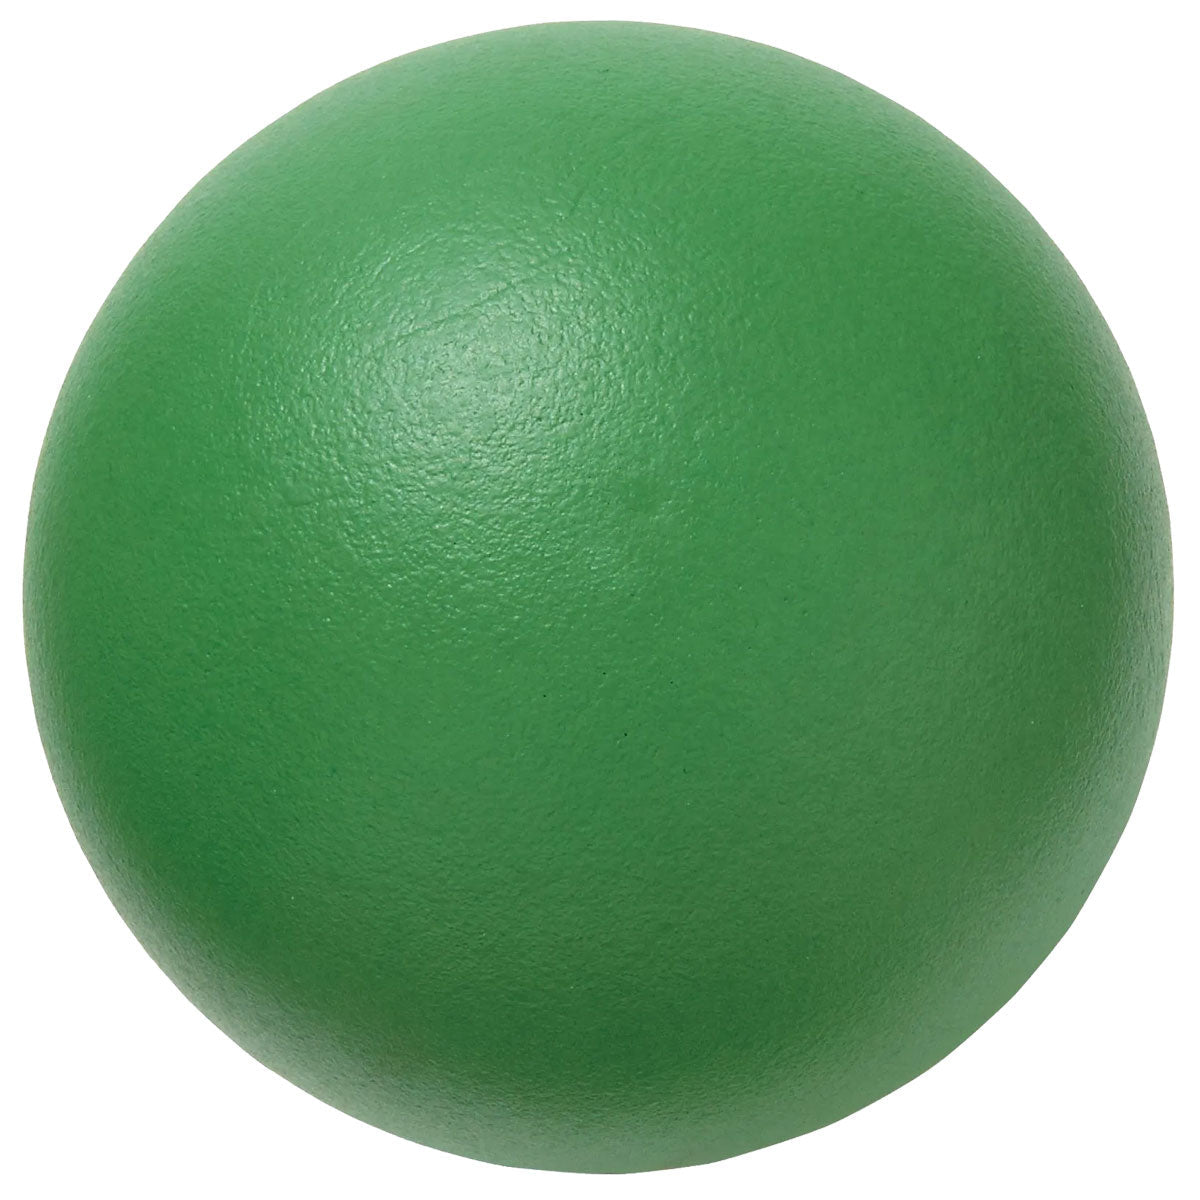 Active Play Coated 150mm Foam Ball (Single Ball)